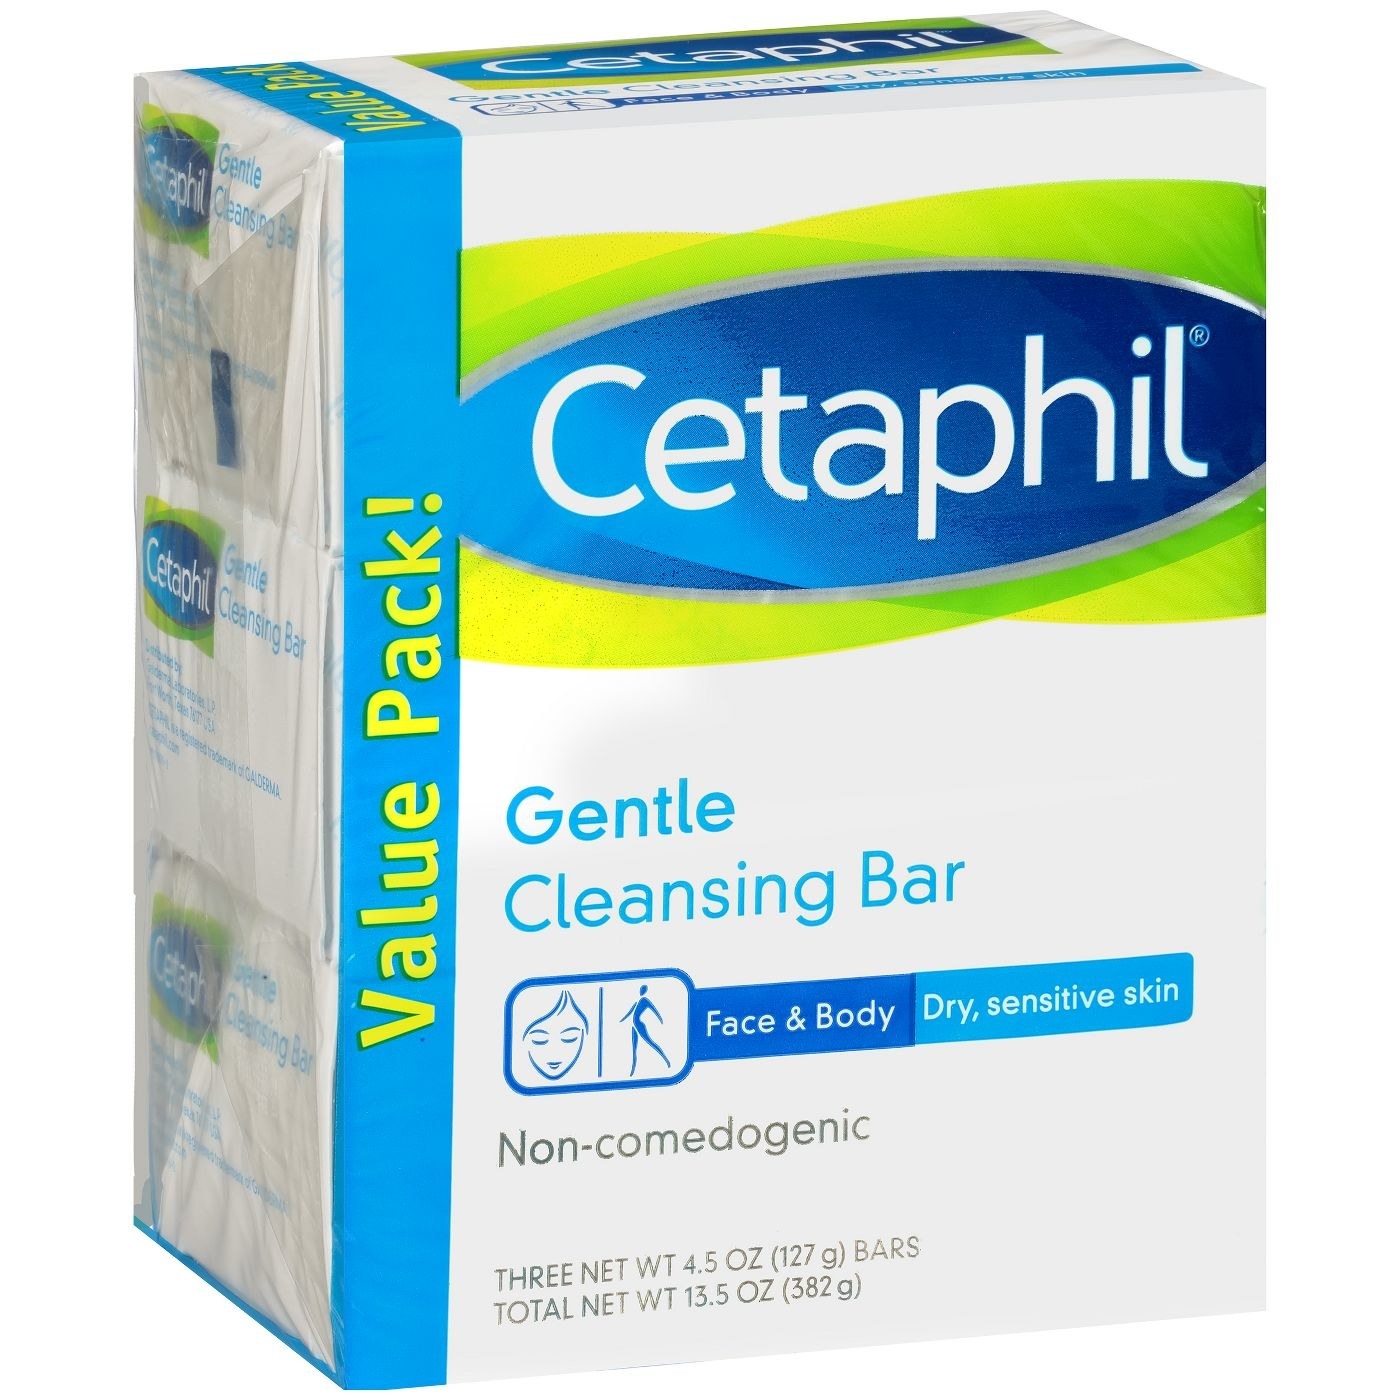 A box of Cetaphil soap